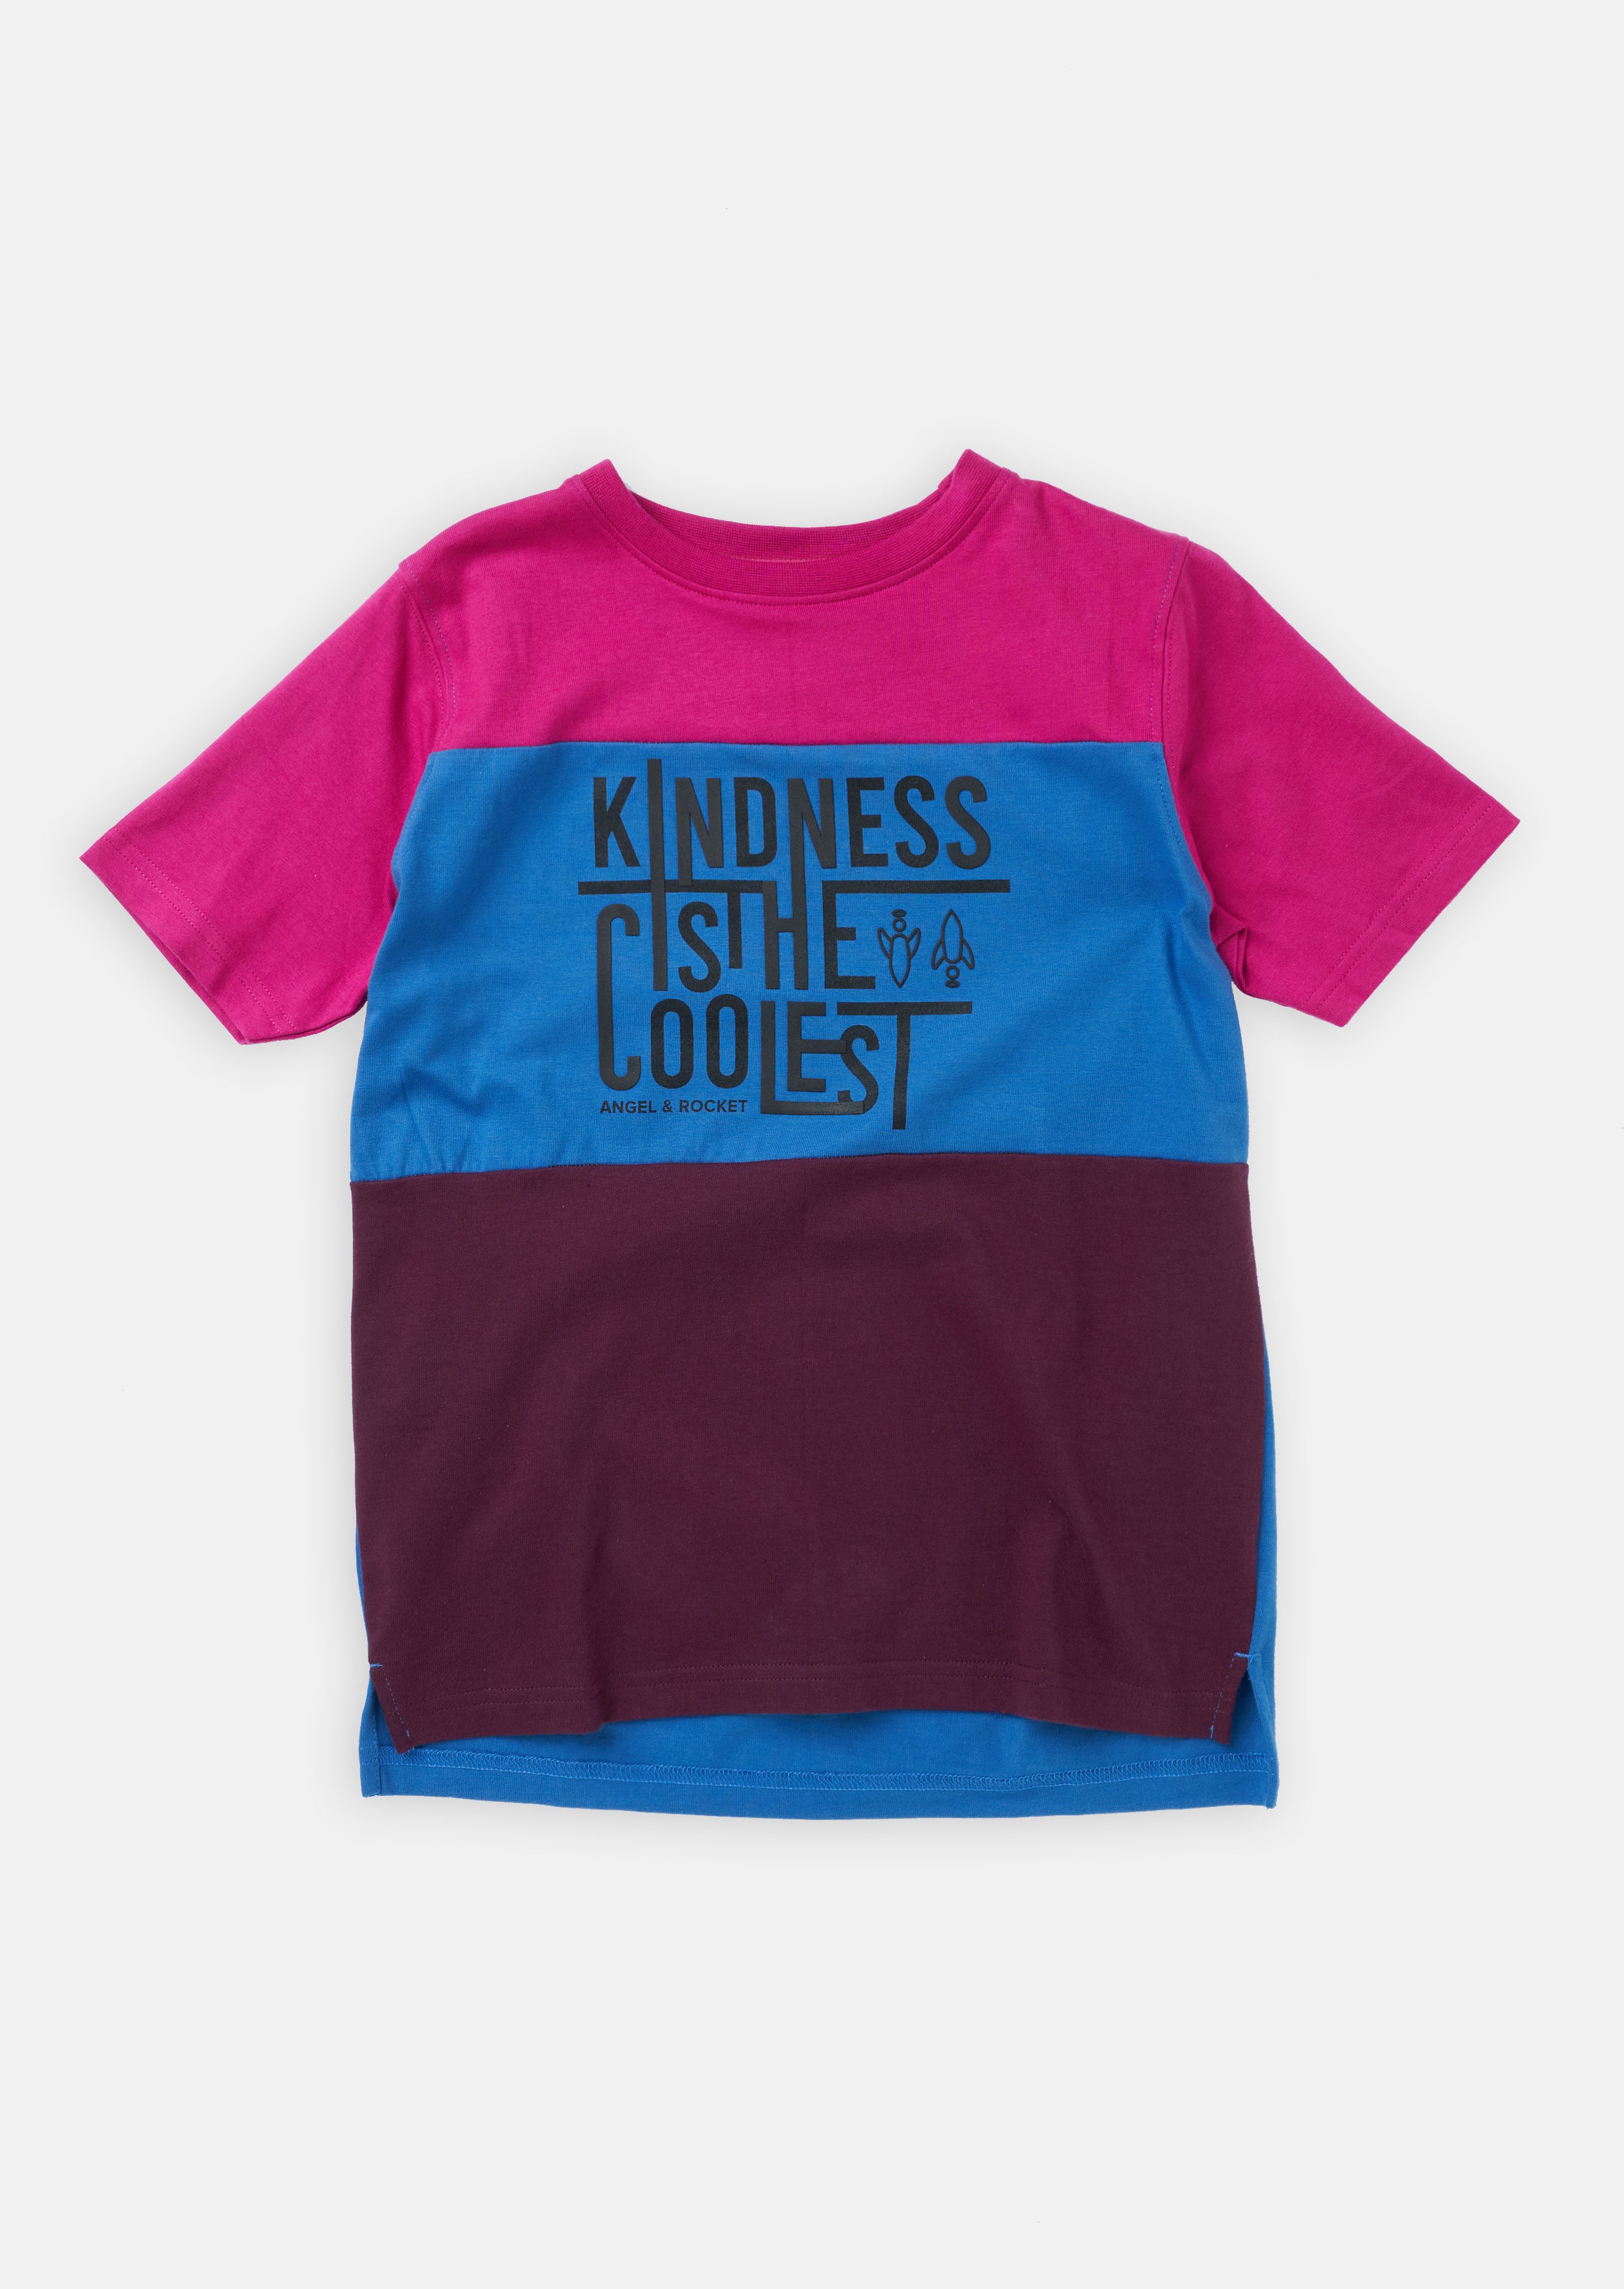 Boys Colour Block and Kindness Slogan Printed T-Shirt